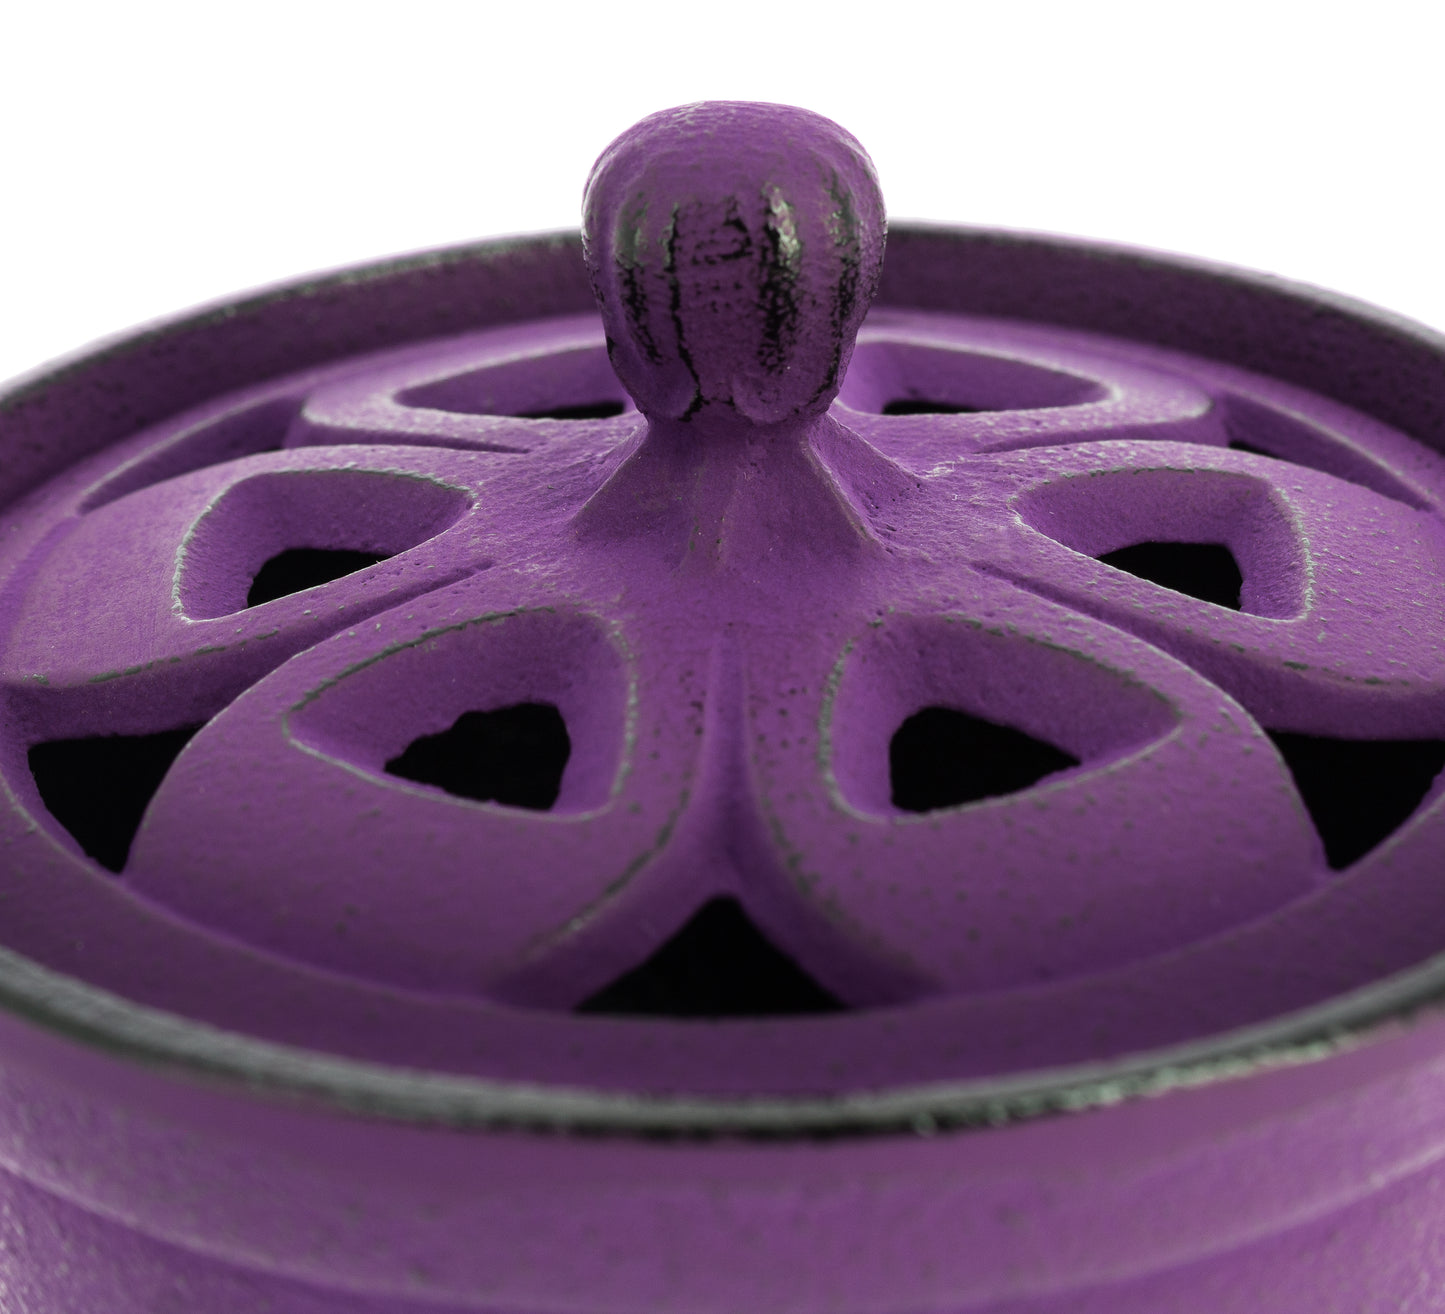 Iwachu Incense Burner - Purple Bowl